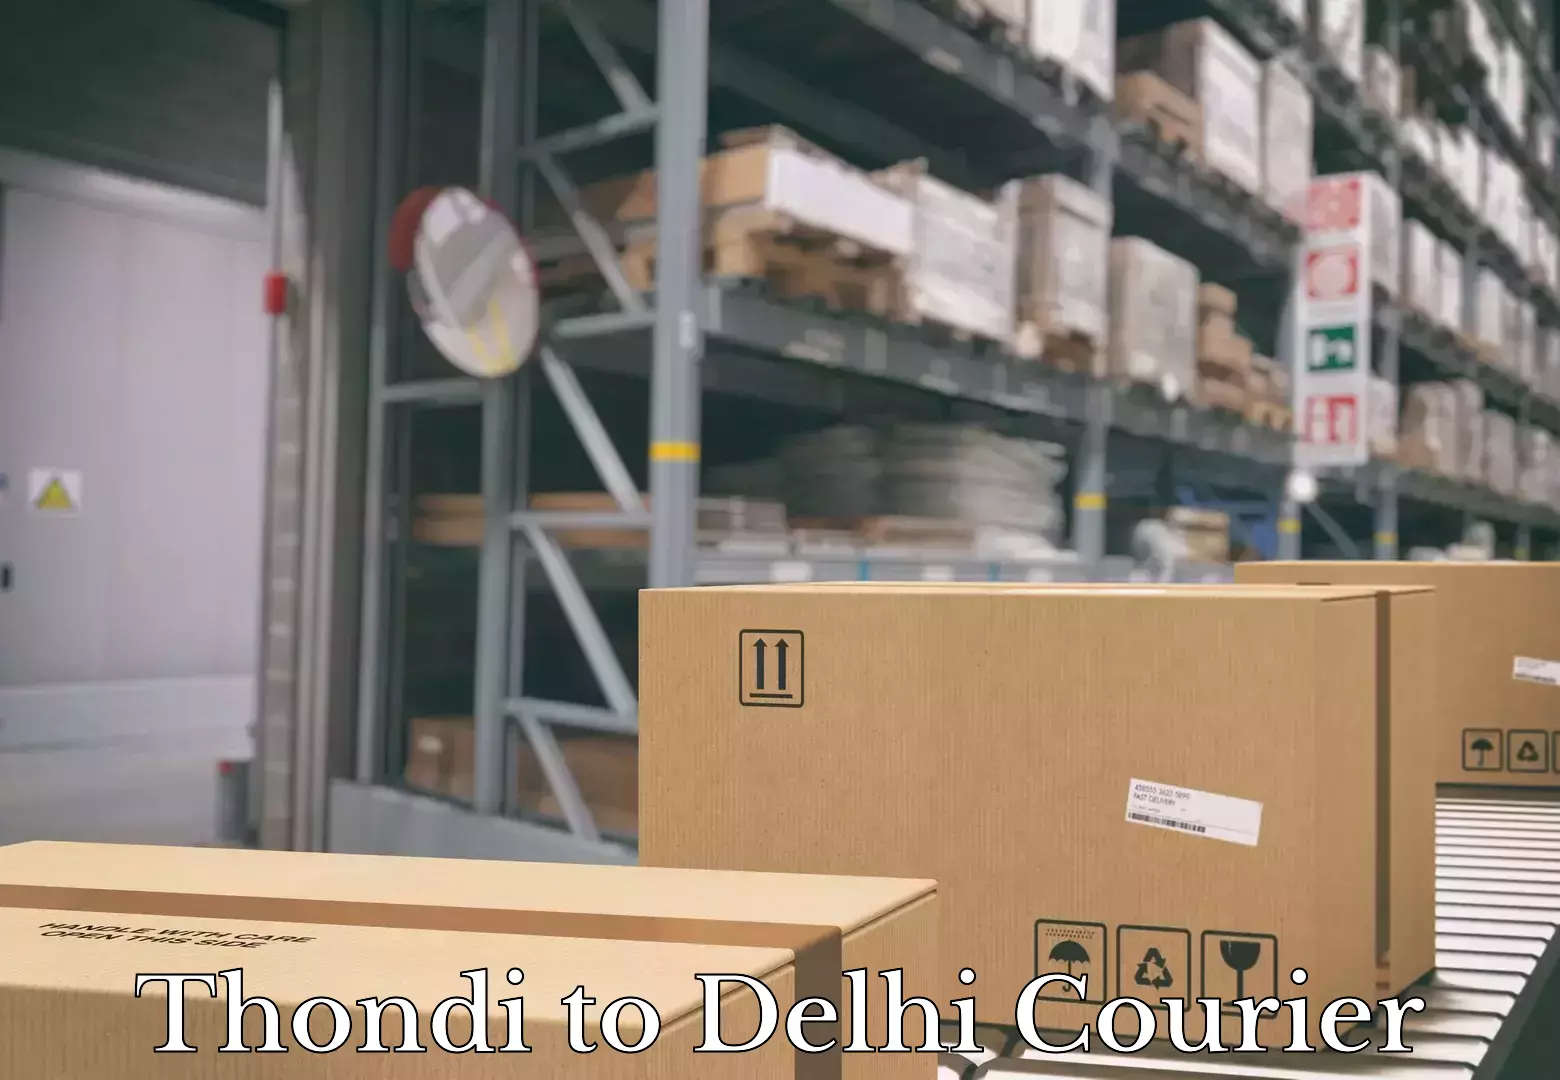 Professional parcel services Thondi to Delhi